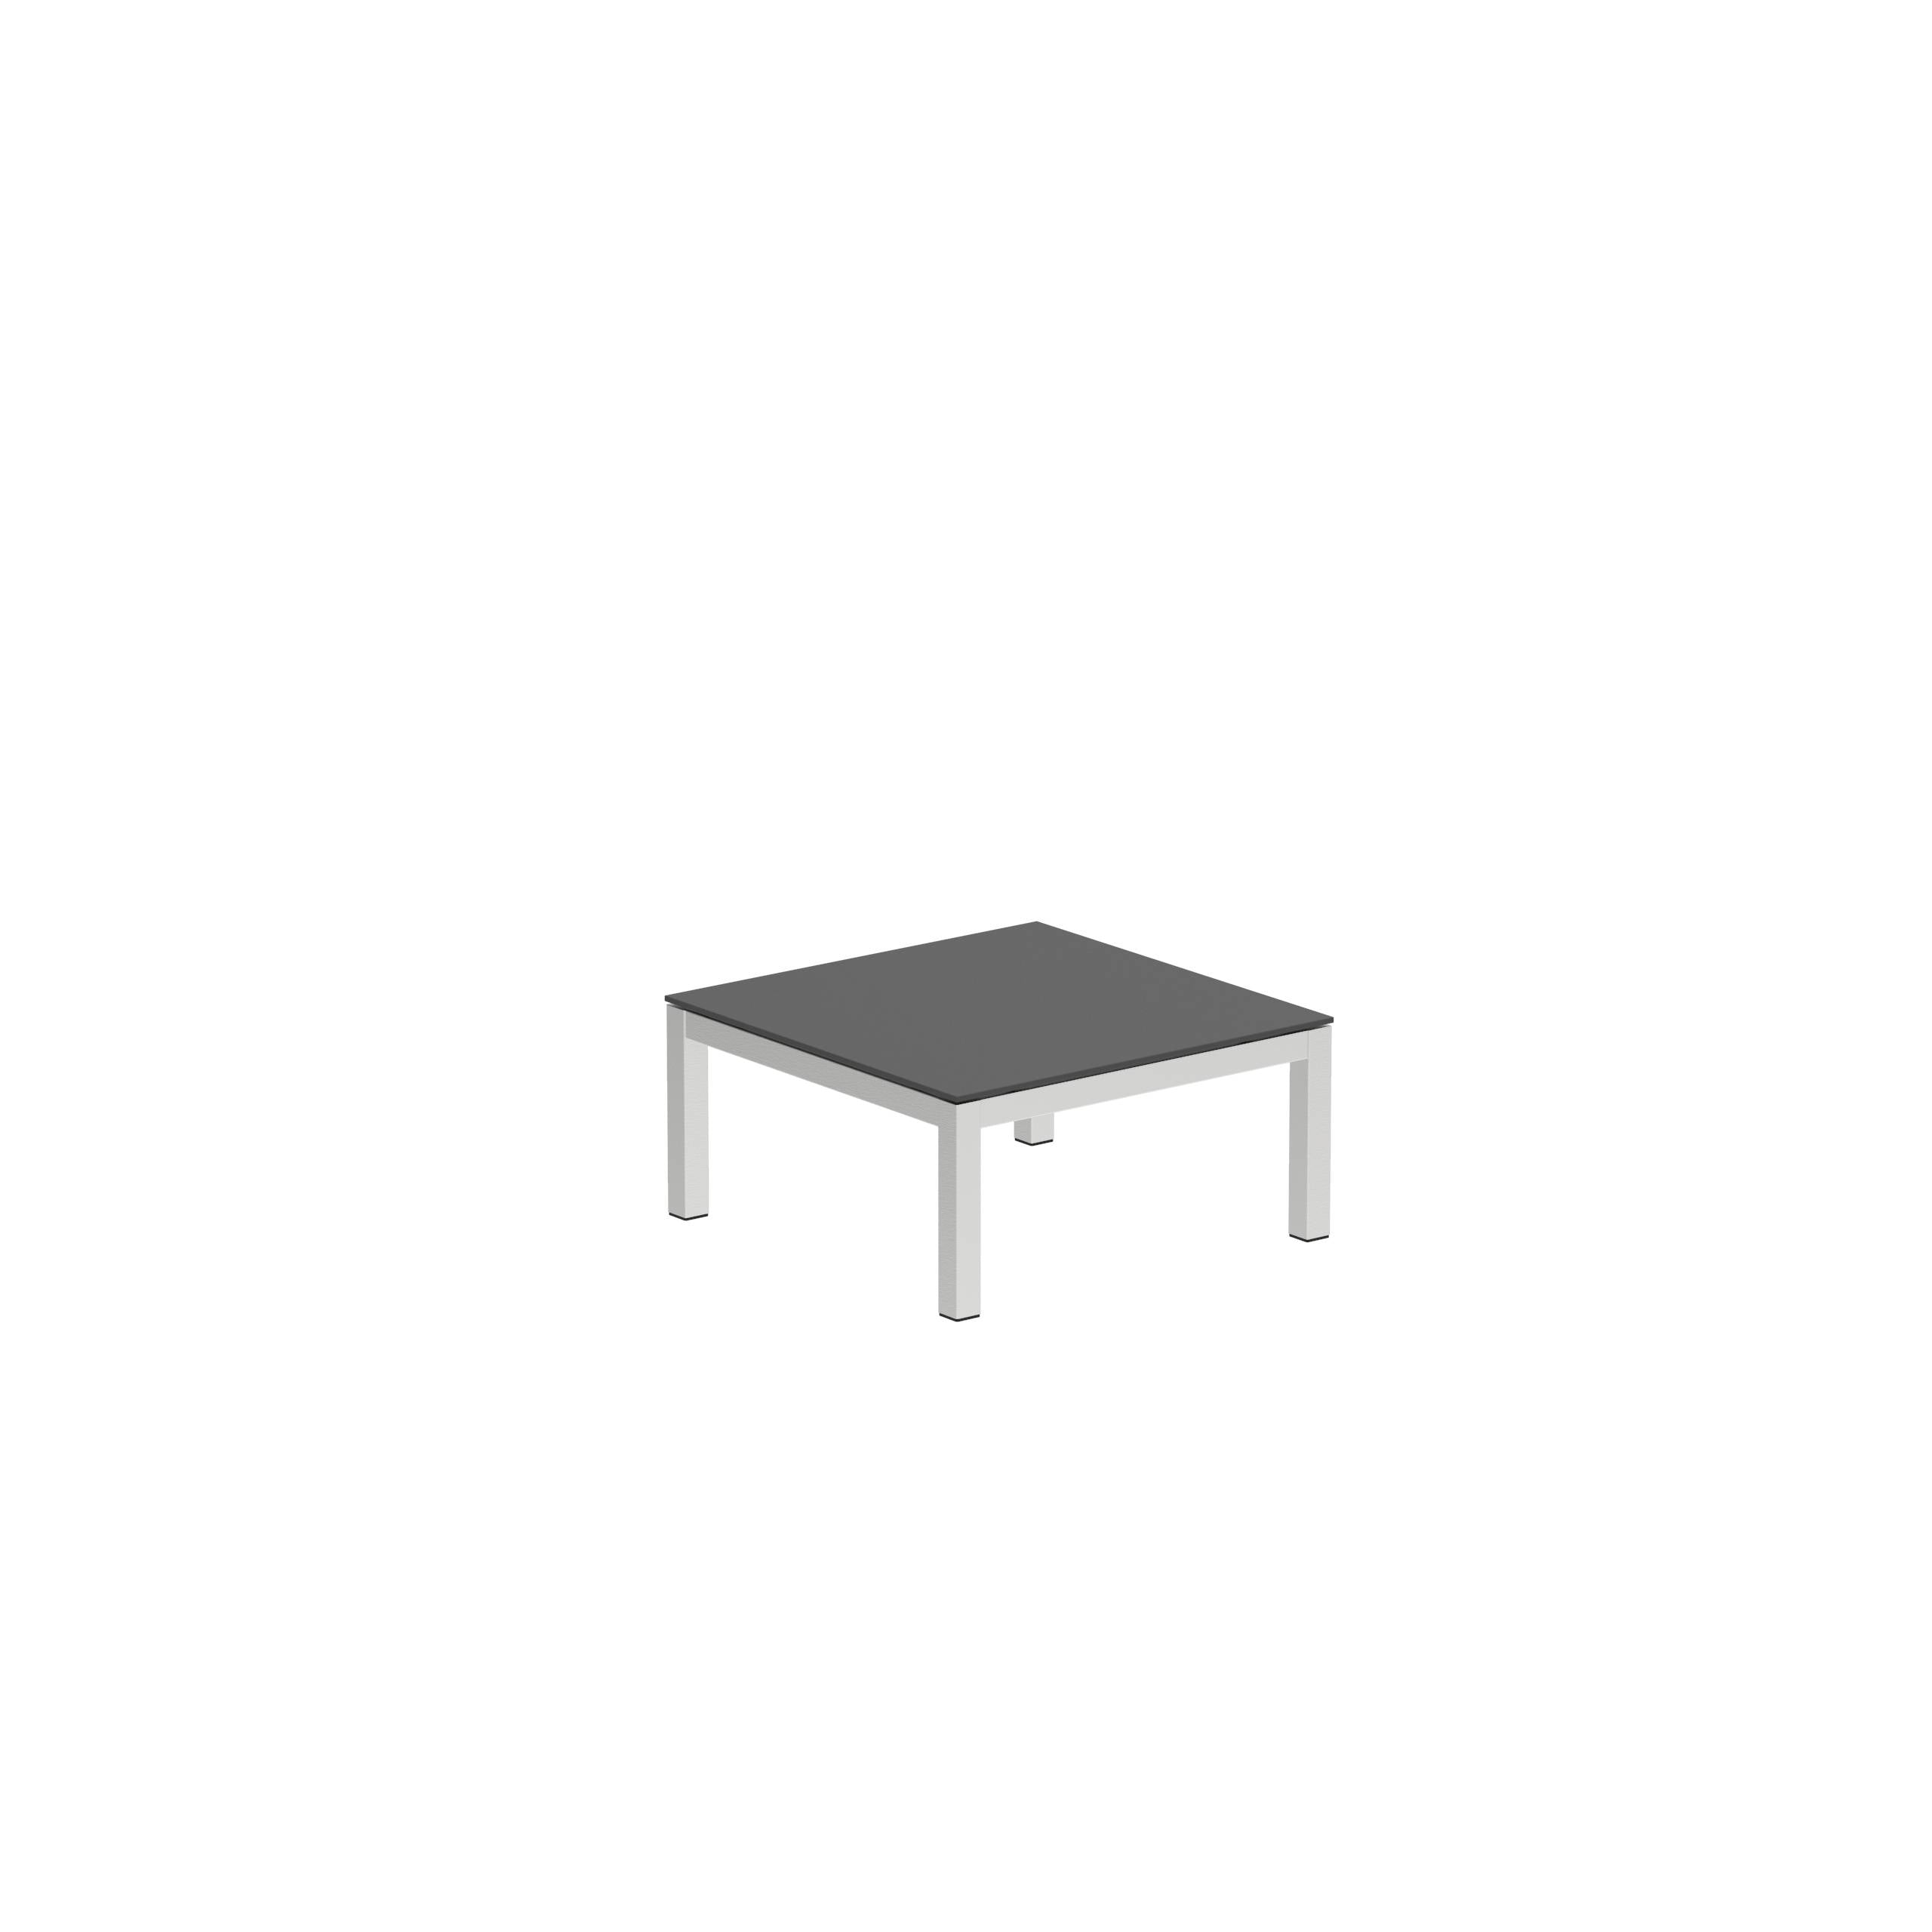 Taboela Low Table 80x80cm + Ceramic Top Black